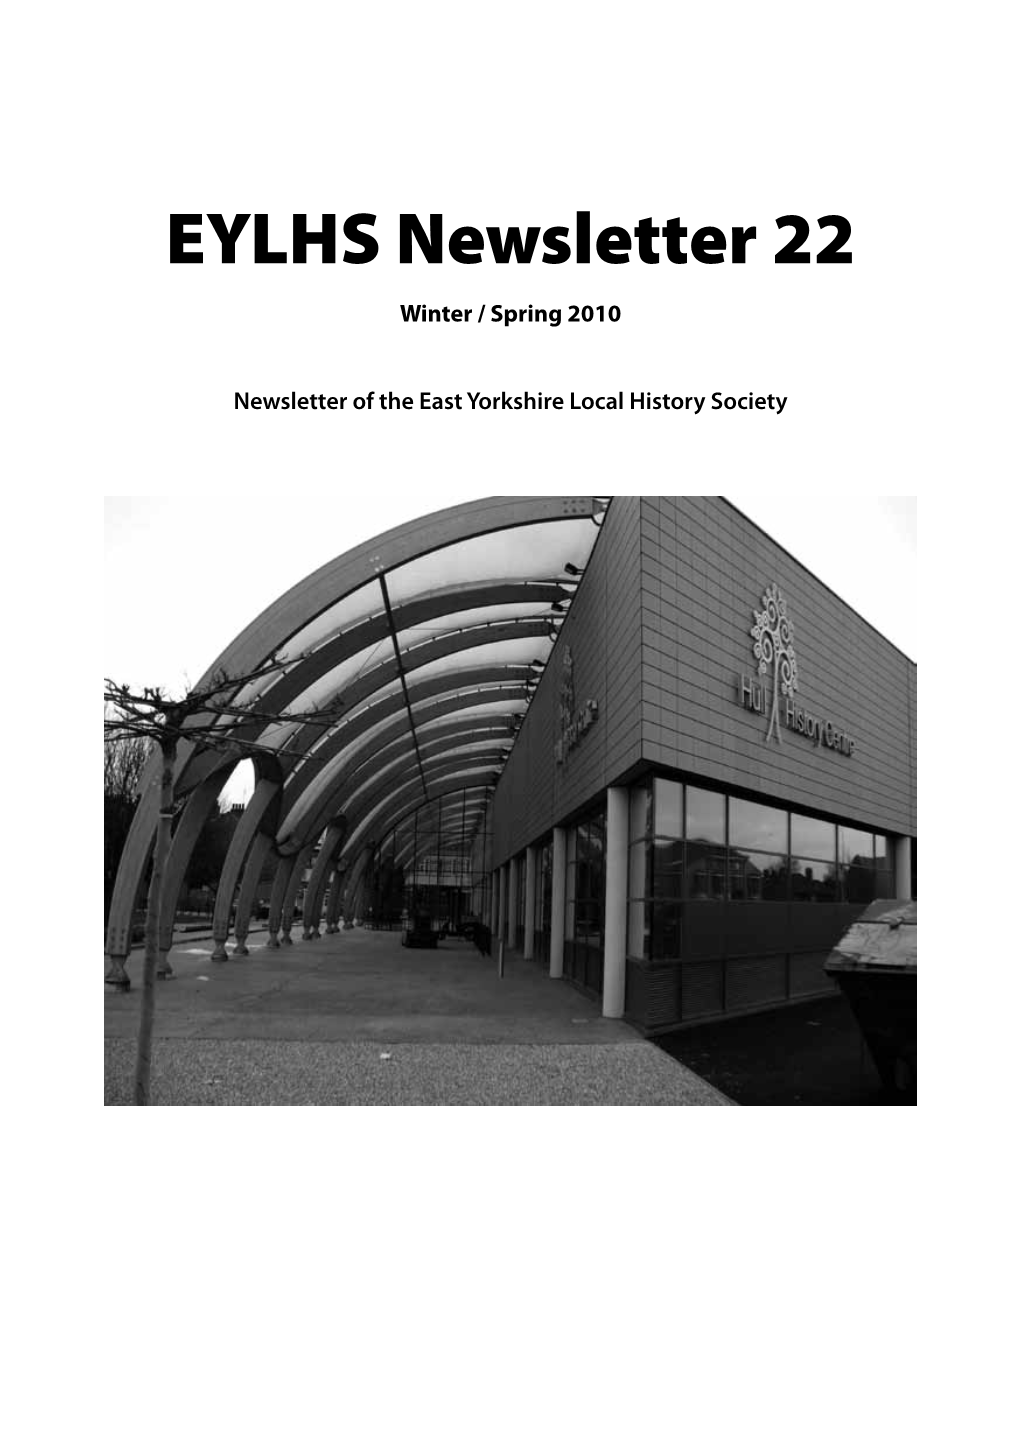 EYLHS Newsletter 22 Winter / Spring 2010